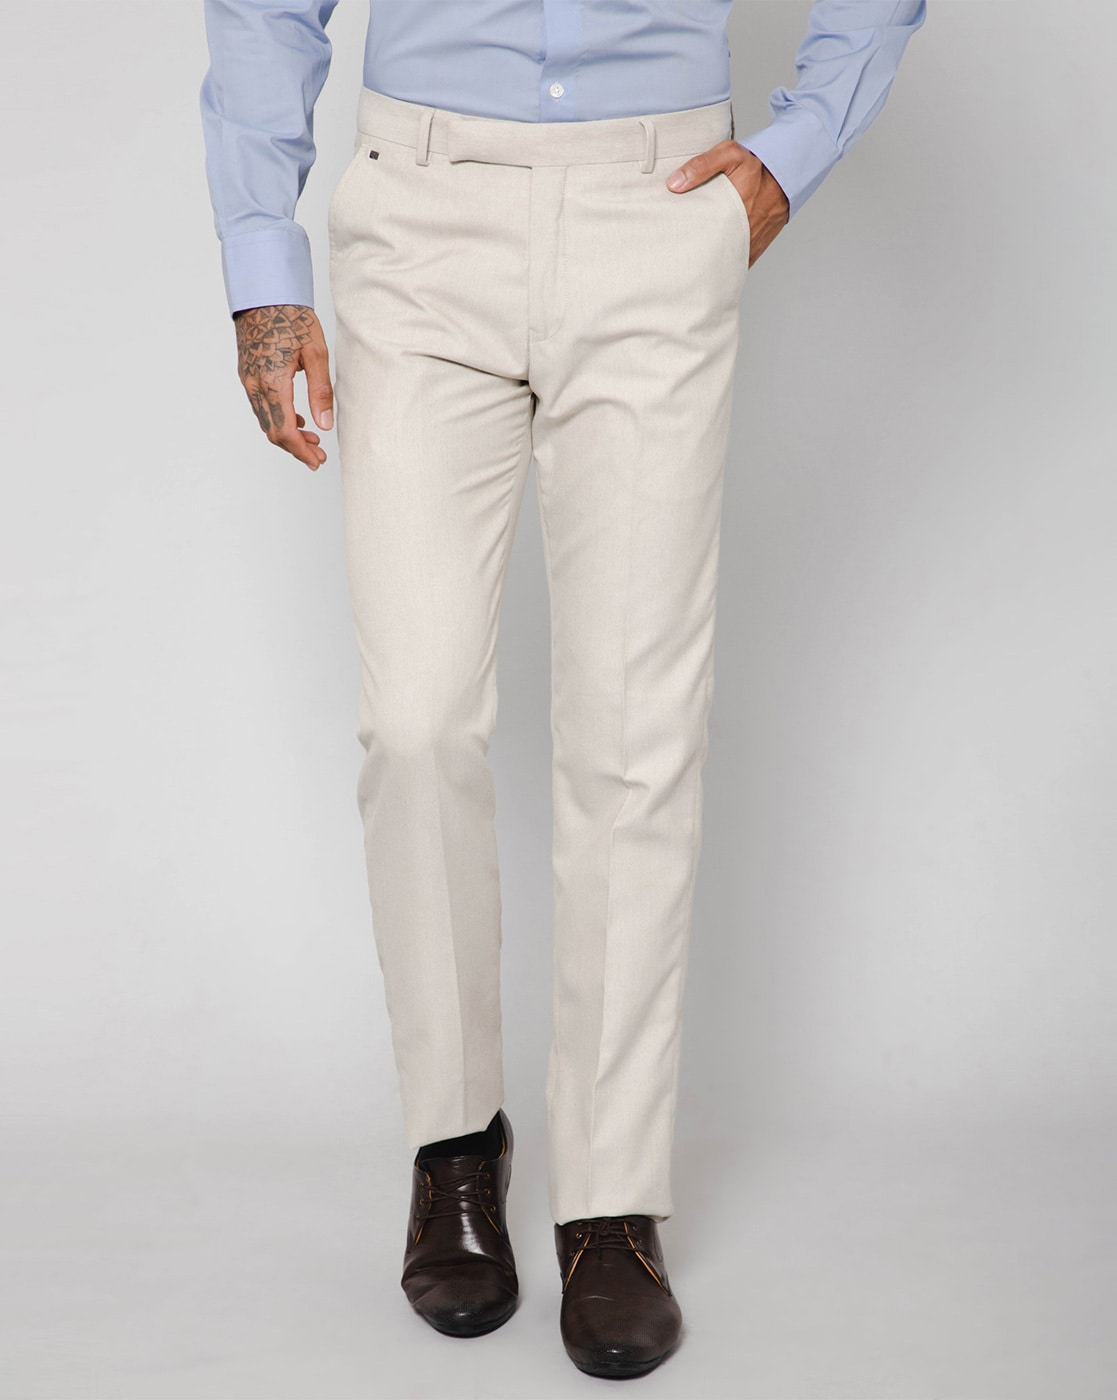 Riglozi 4 Way Plain Strachable Trouser for MenTrack PentRegular Fit Pent Stretchable PentJean PentCotton PentBoys Pent